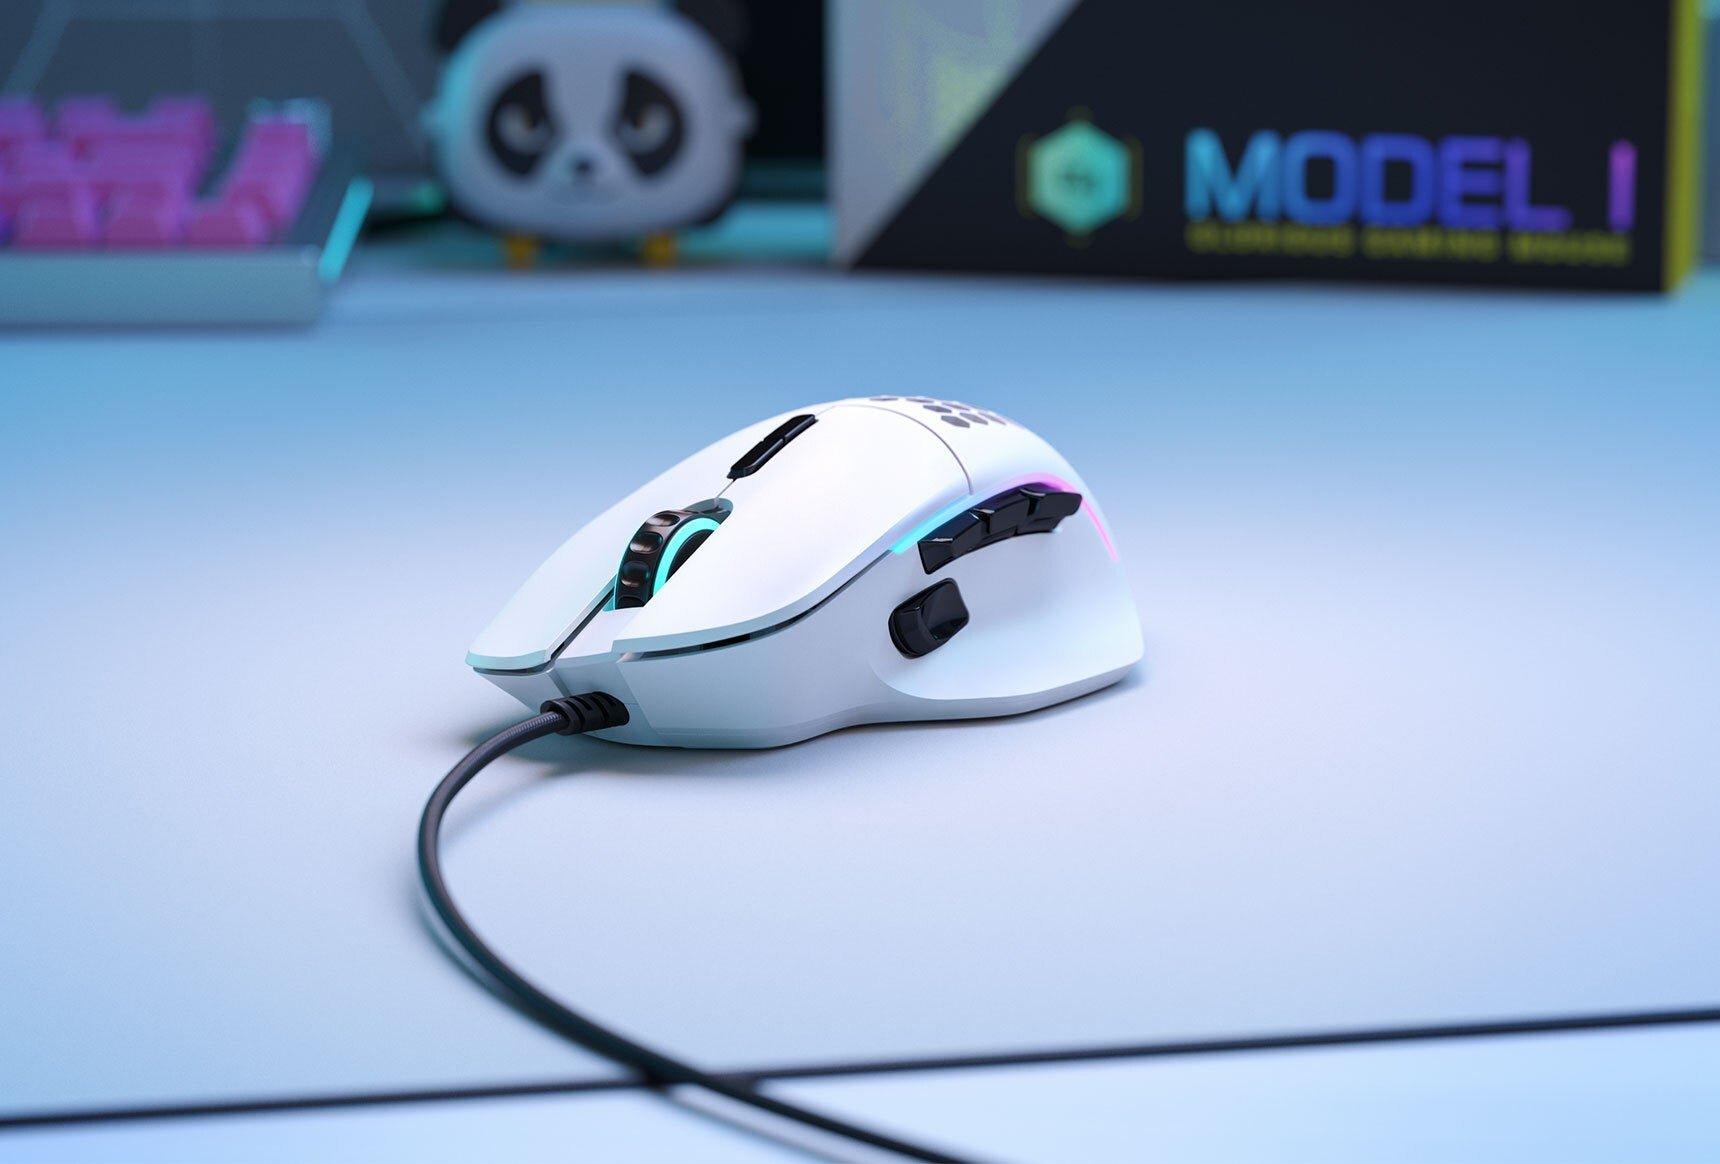 Glorious PC Gaming Race  Model I Gaming Maus - matte white 